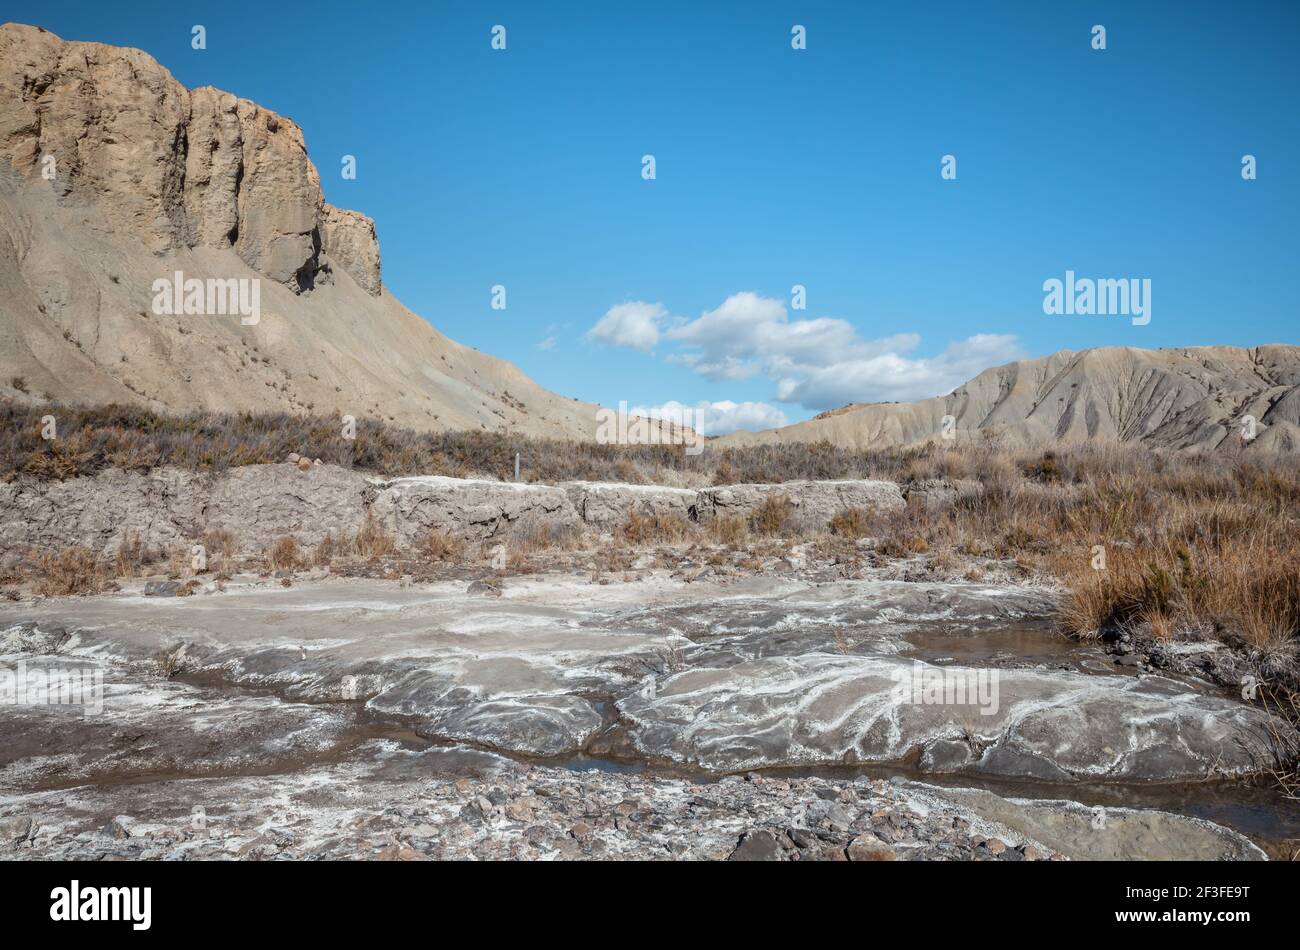 Salt covered soil of the dry river bed landscape in the Tabernas desert Almeria Spain Nature adventure Travel Europe Stock Photo